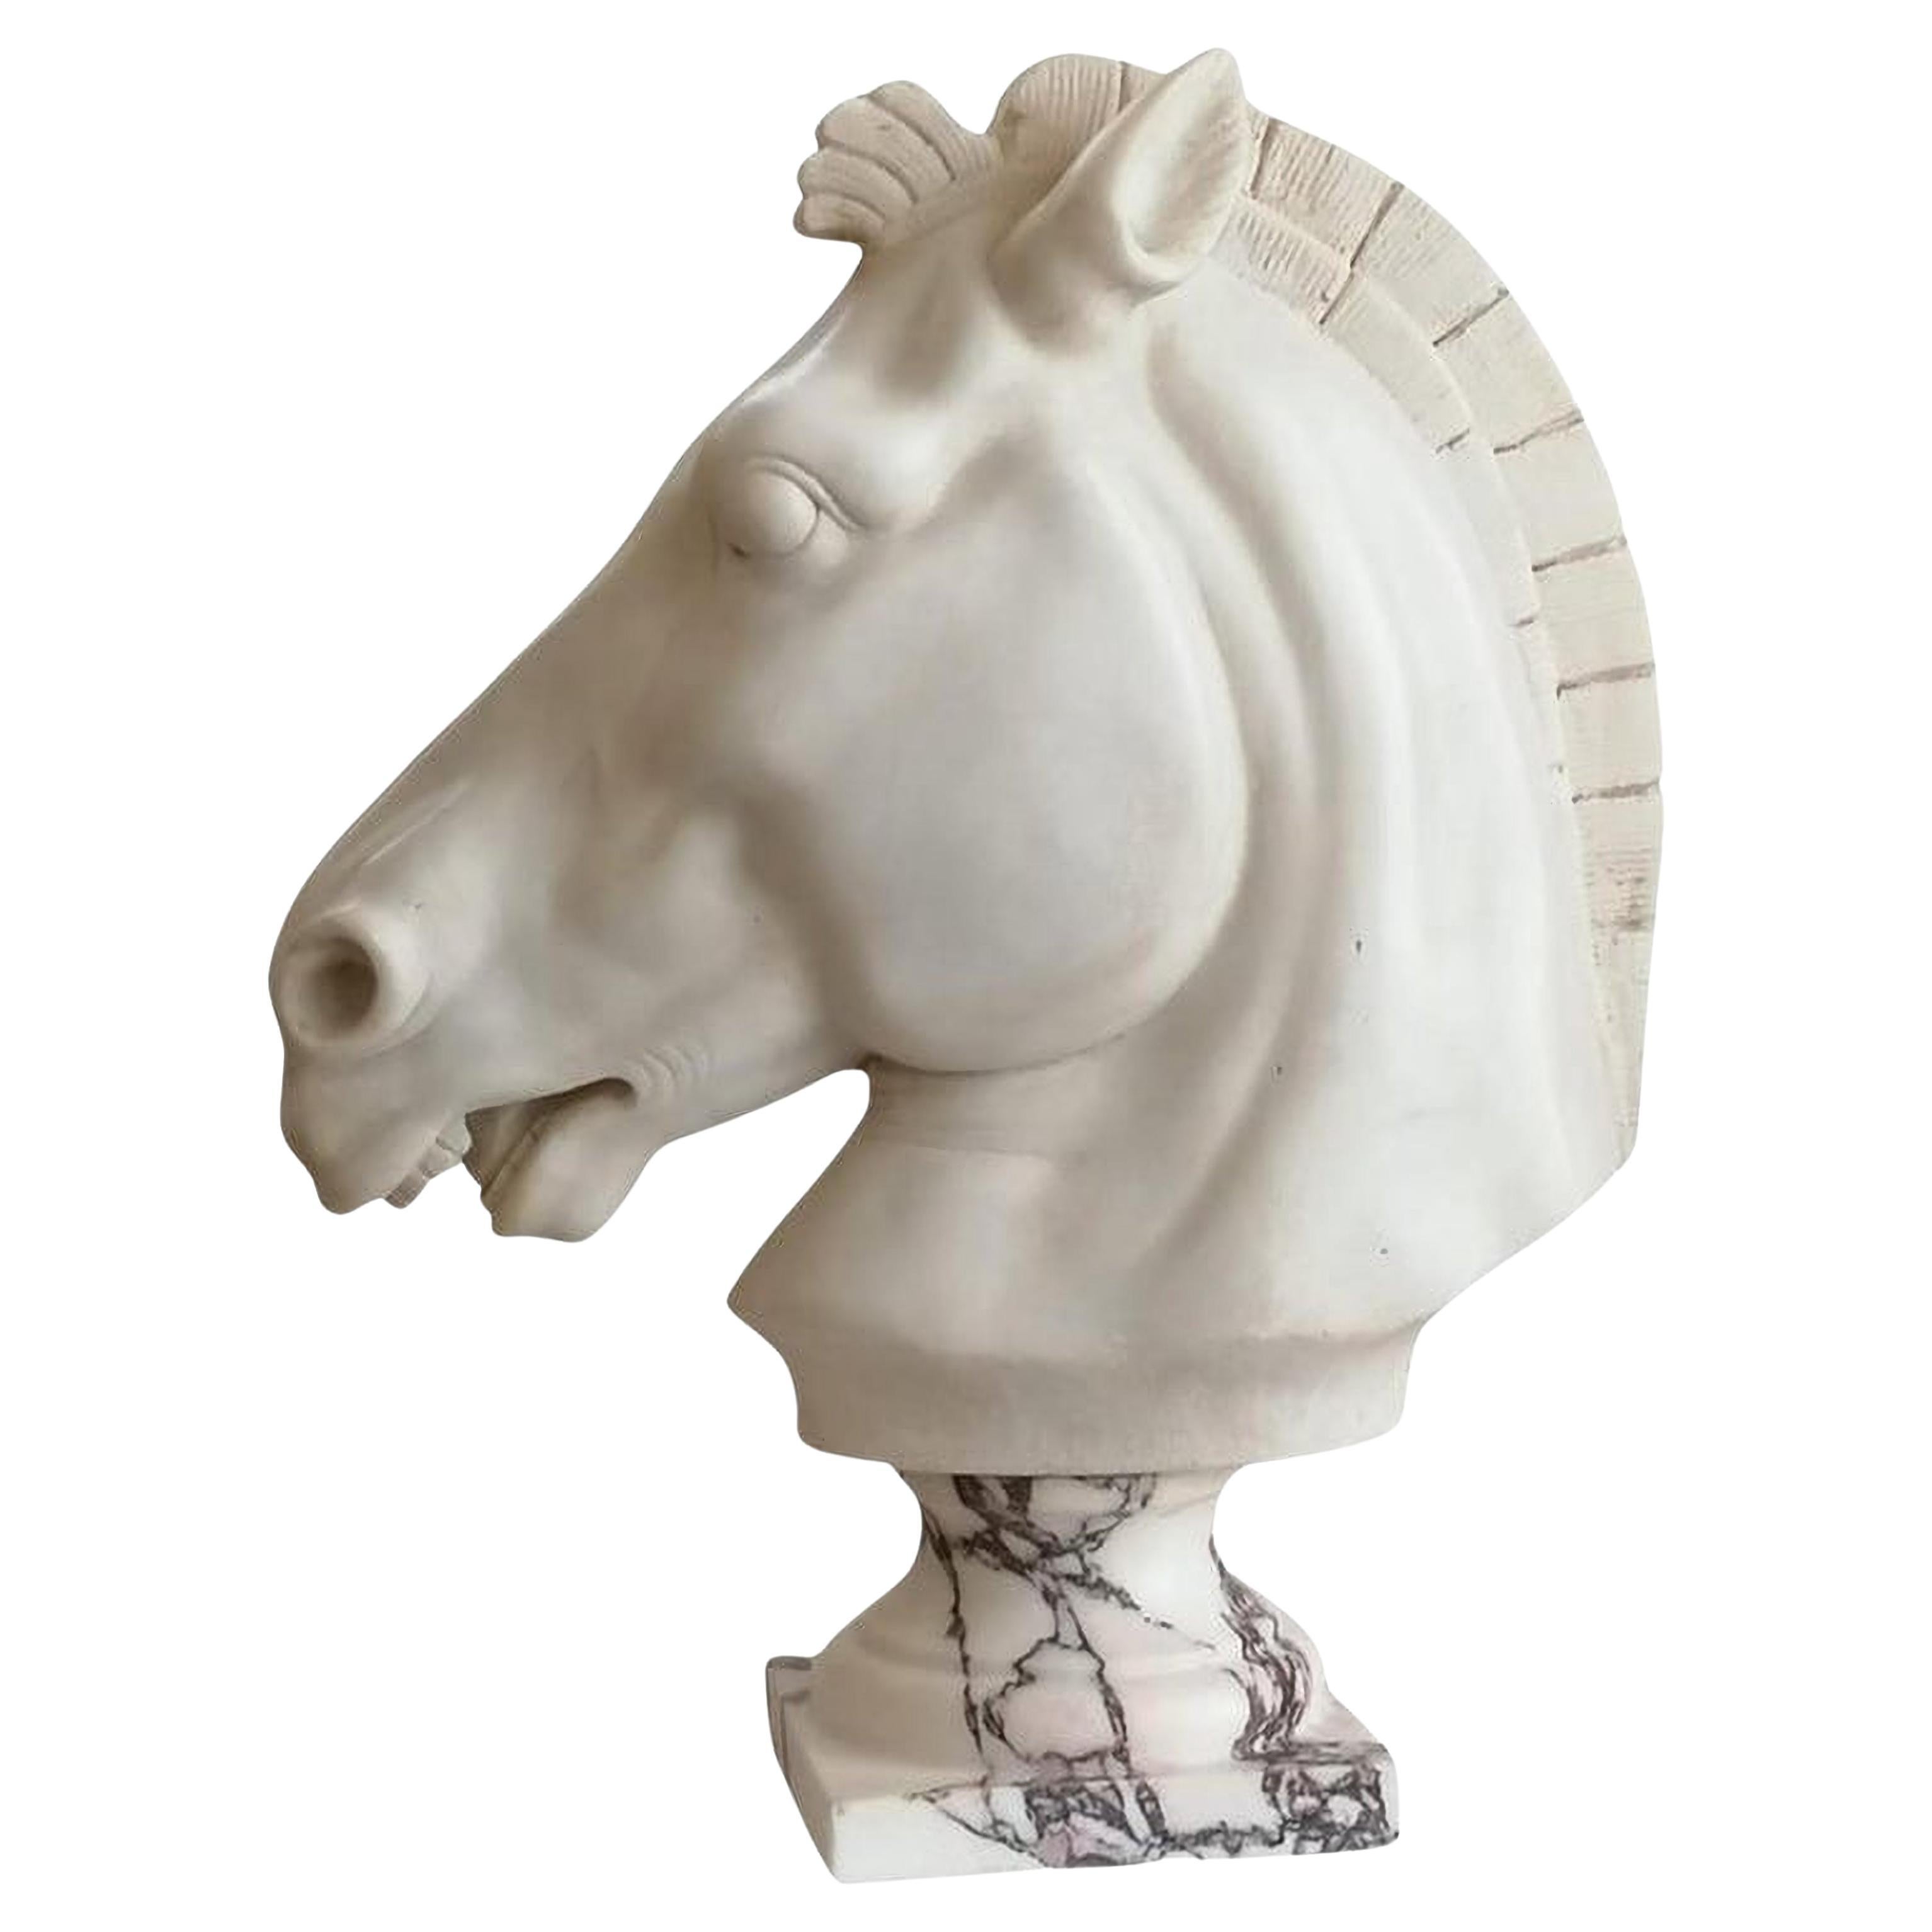 Italian Marble Carrara Sculpture "Horse Head", Early 20th Century For Sale